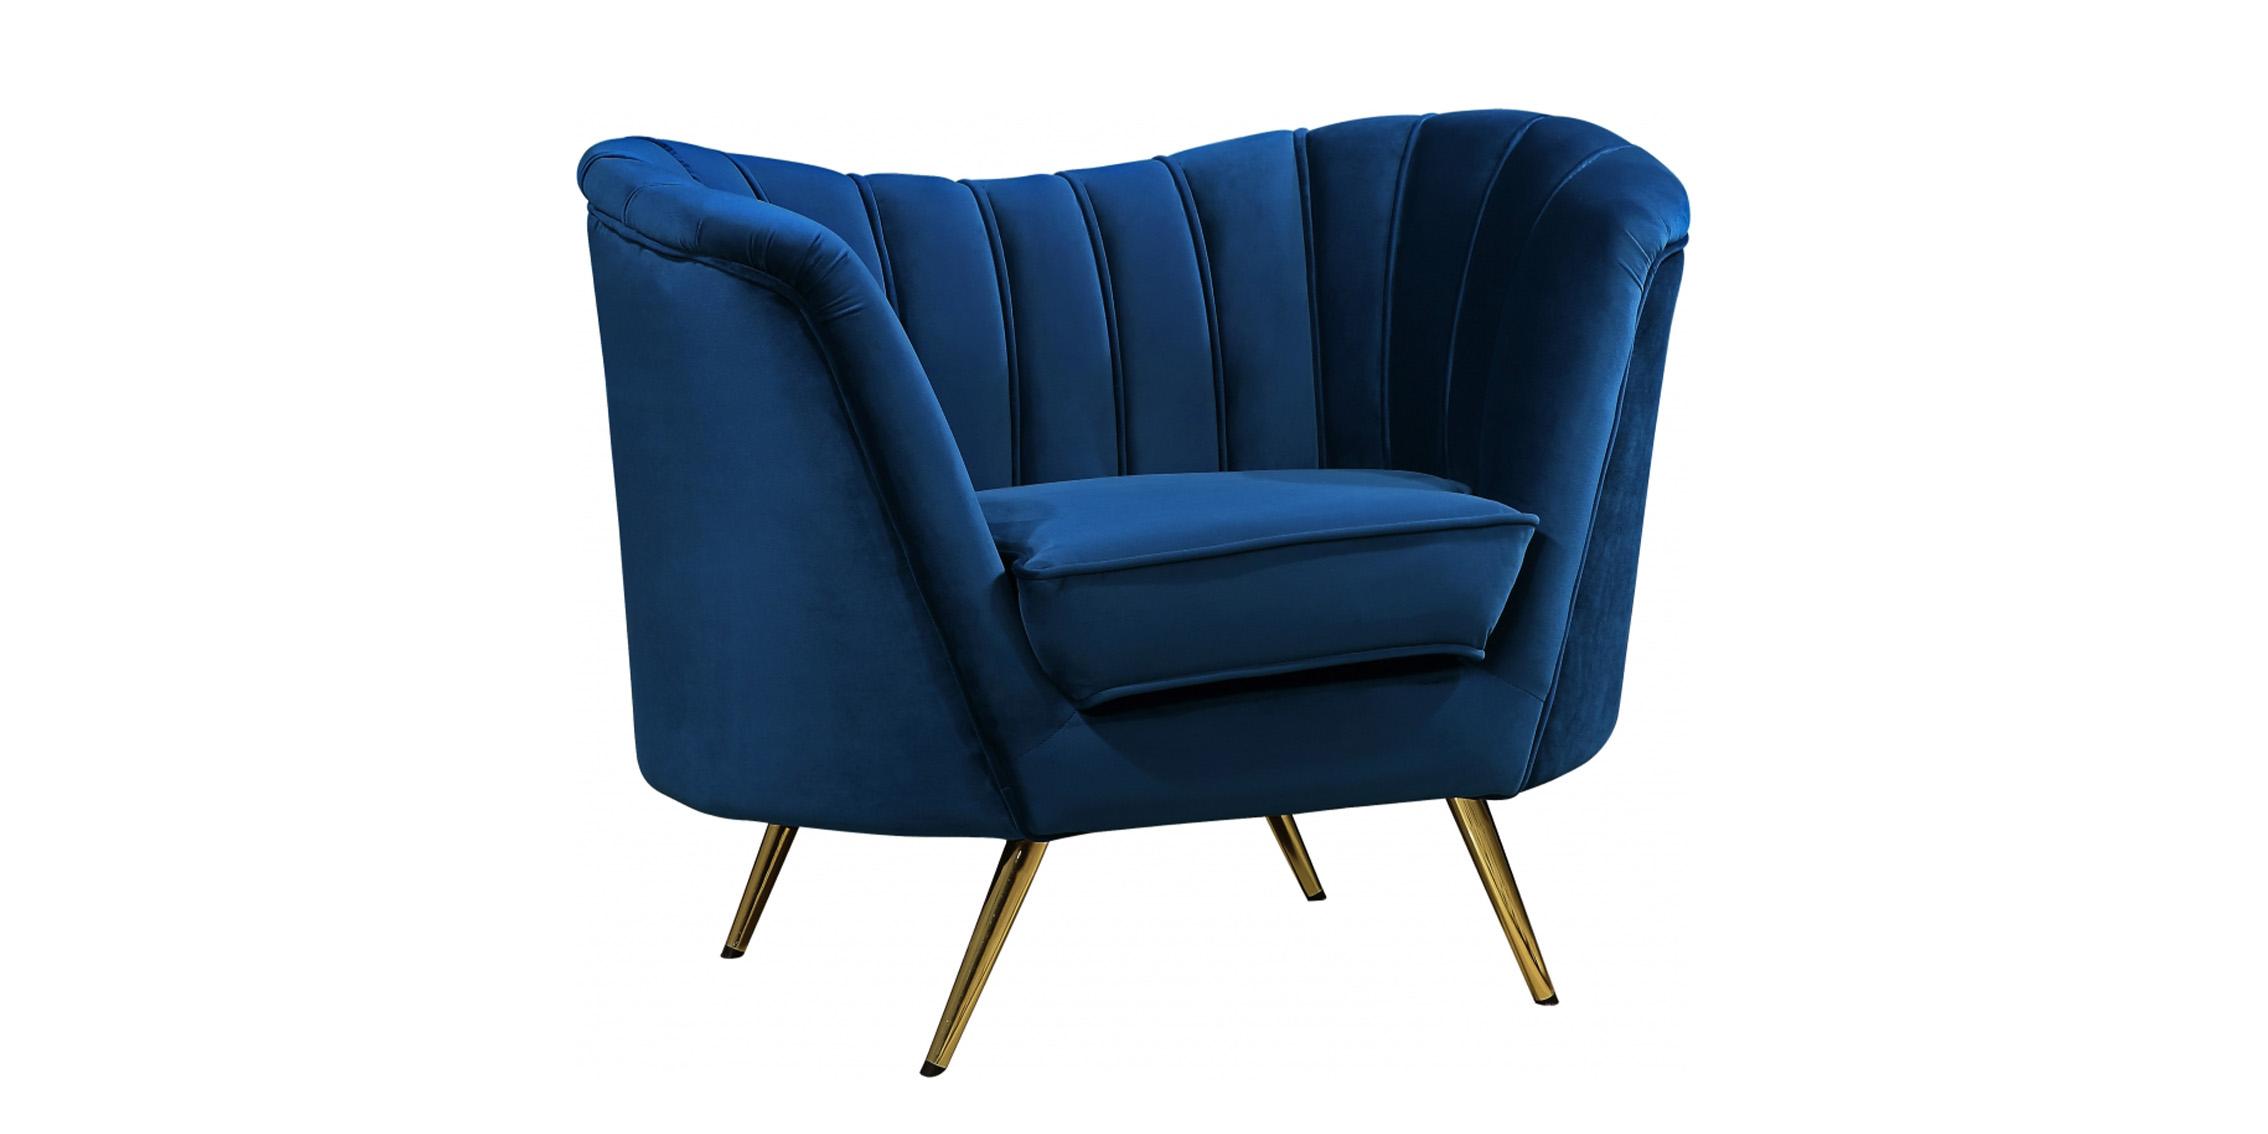 Contemporary, Modern Arm Chair Margo 622Navy-C 622Navy-C in Navy blue Velvet